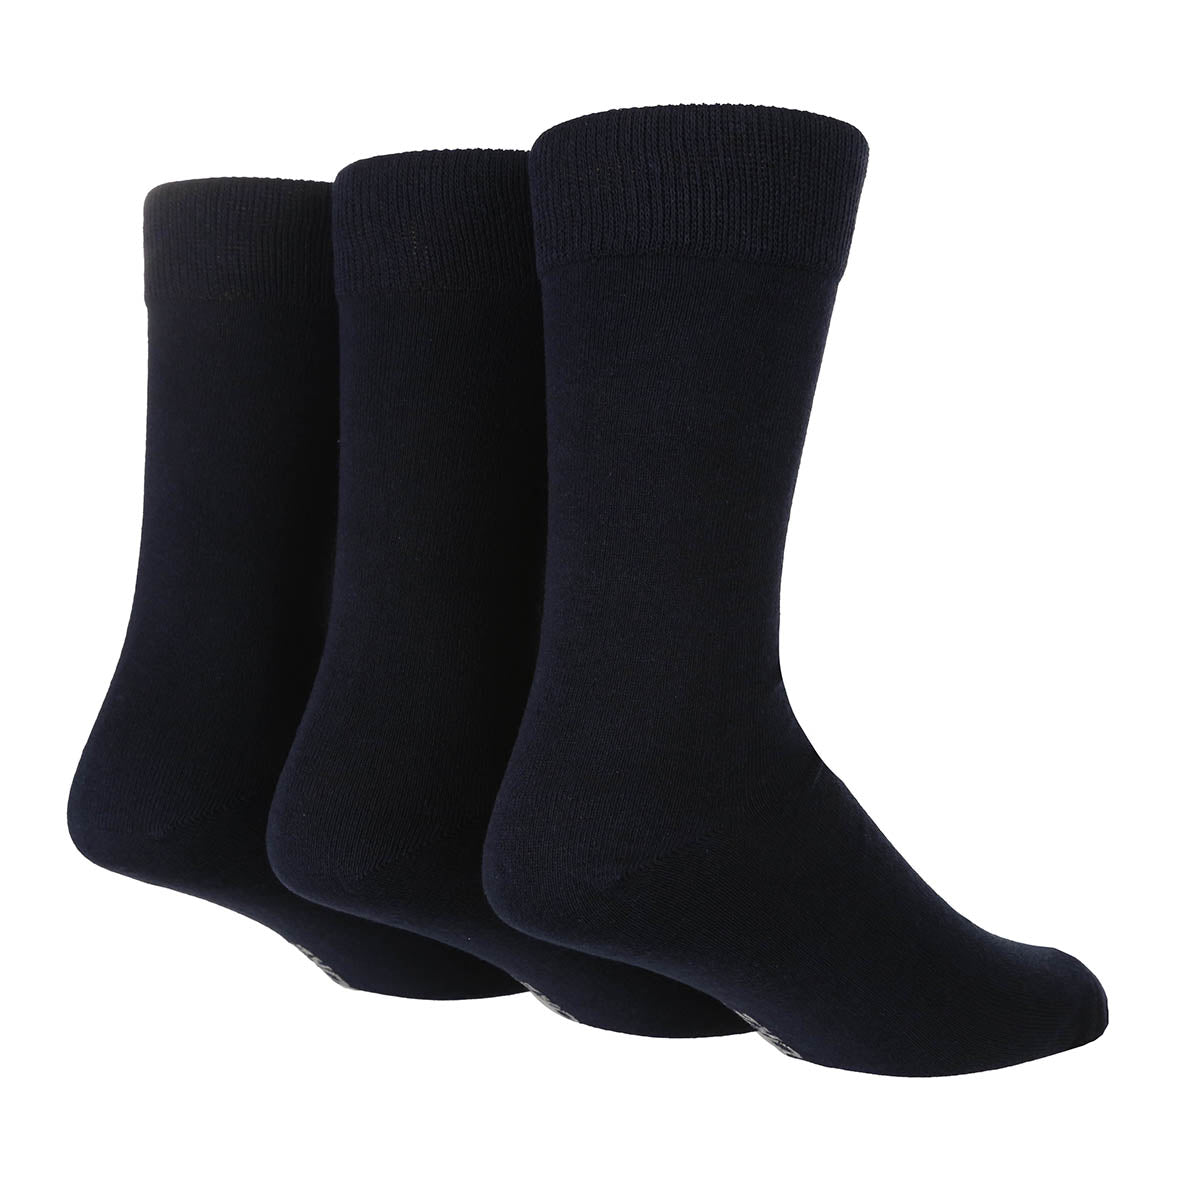 Men's Plain Crew Socks - 3 Pairs